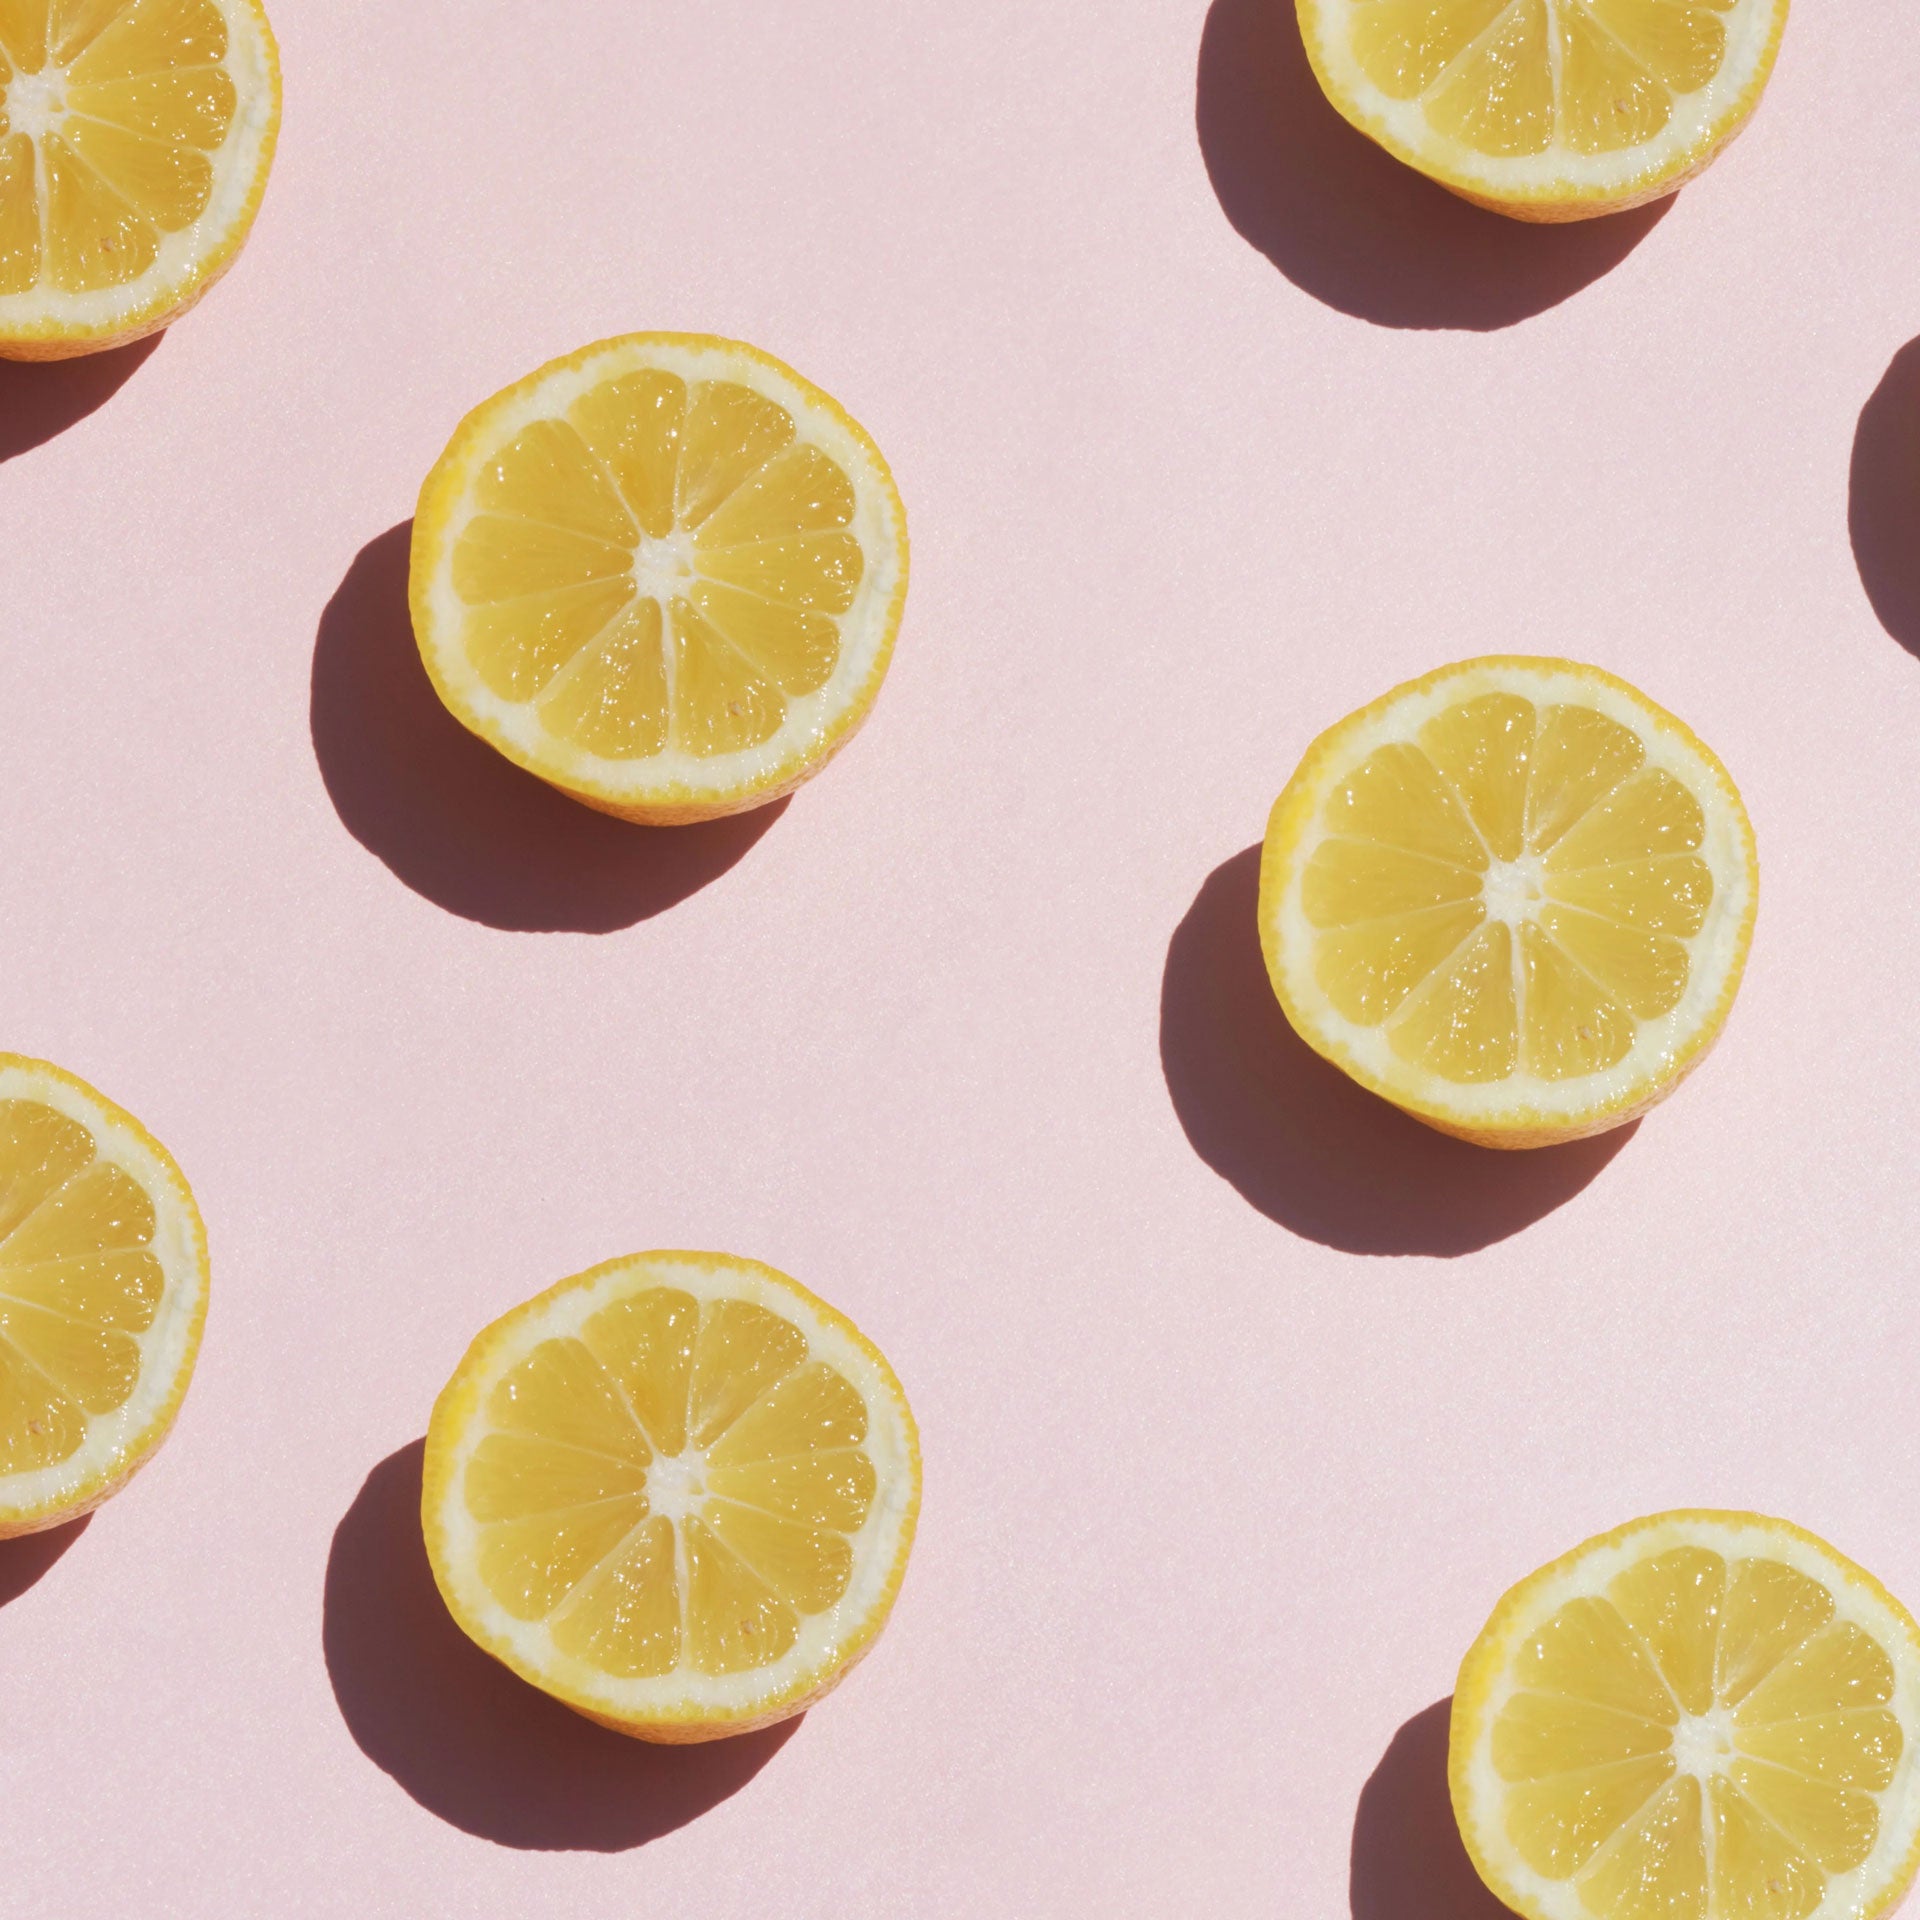 Australian Lemon Myrtle - The Best Lemon Substitute You Never Knew You Needed